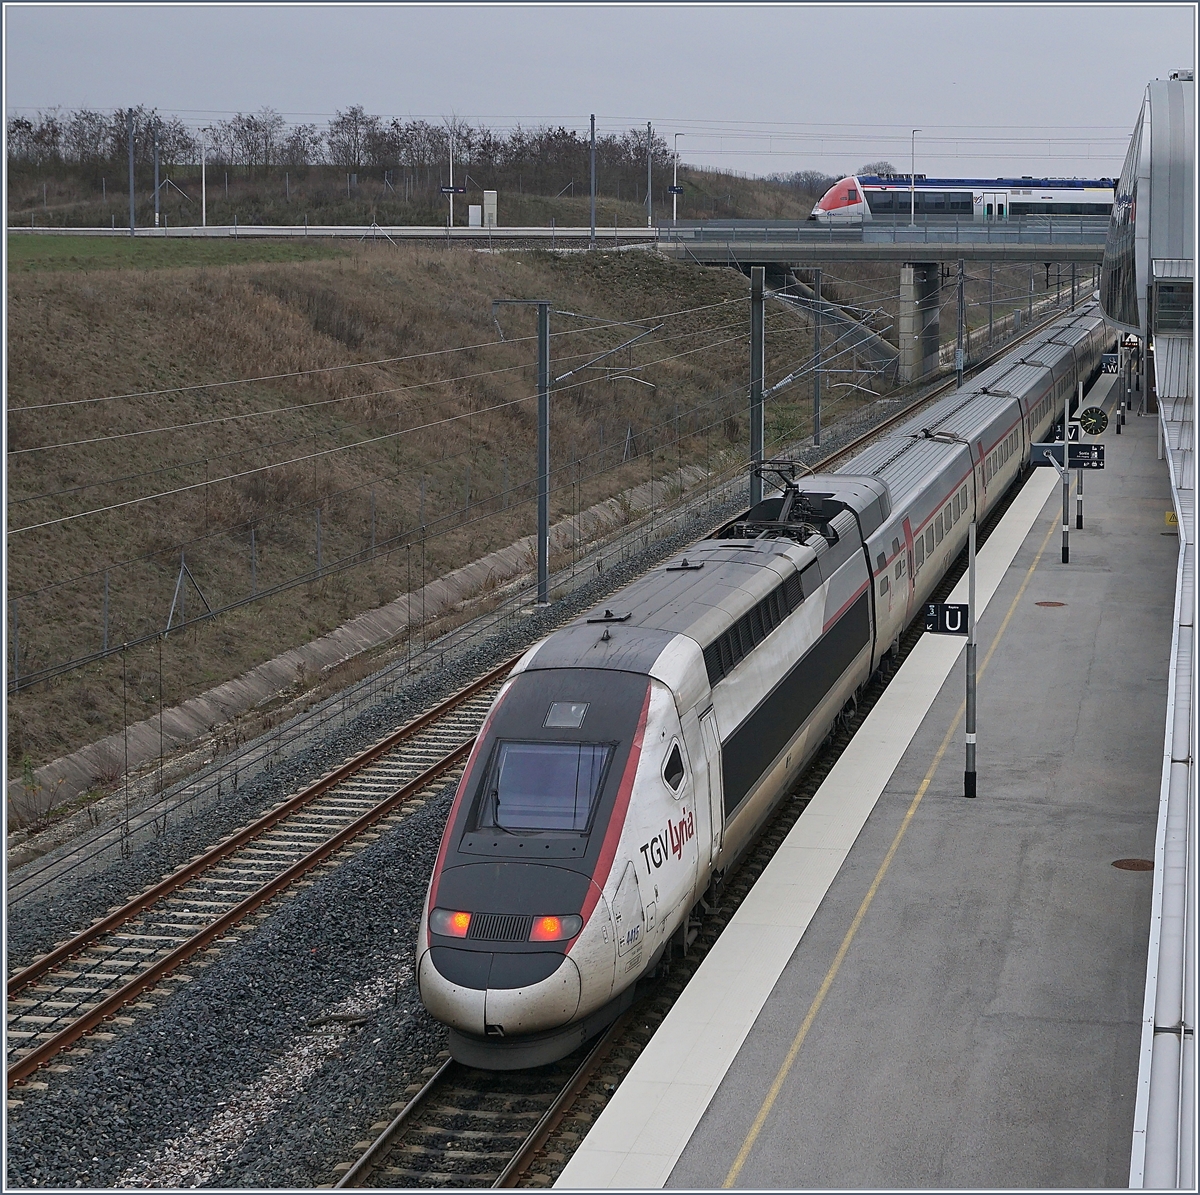 TGV Lyria 9203 from Paris to Zürich by his stop in Belfort Montbéliard TGV.
15.12.2018